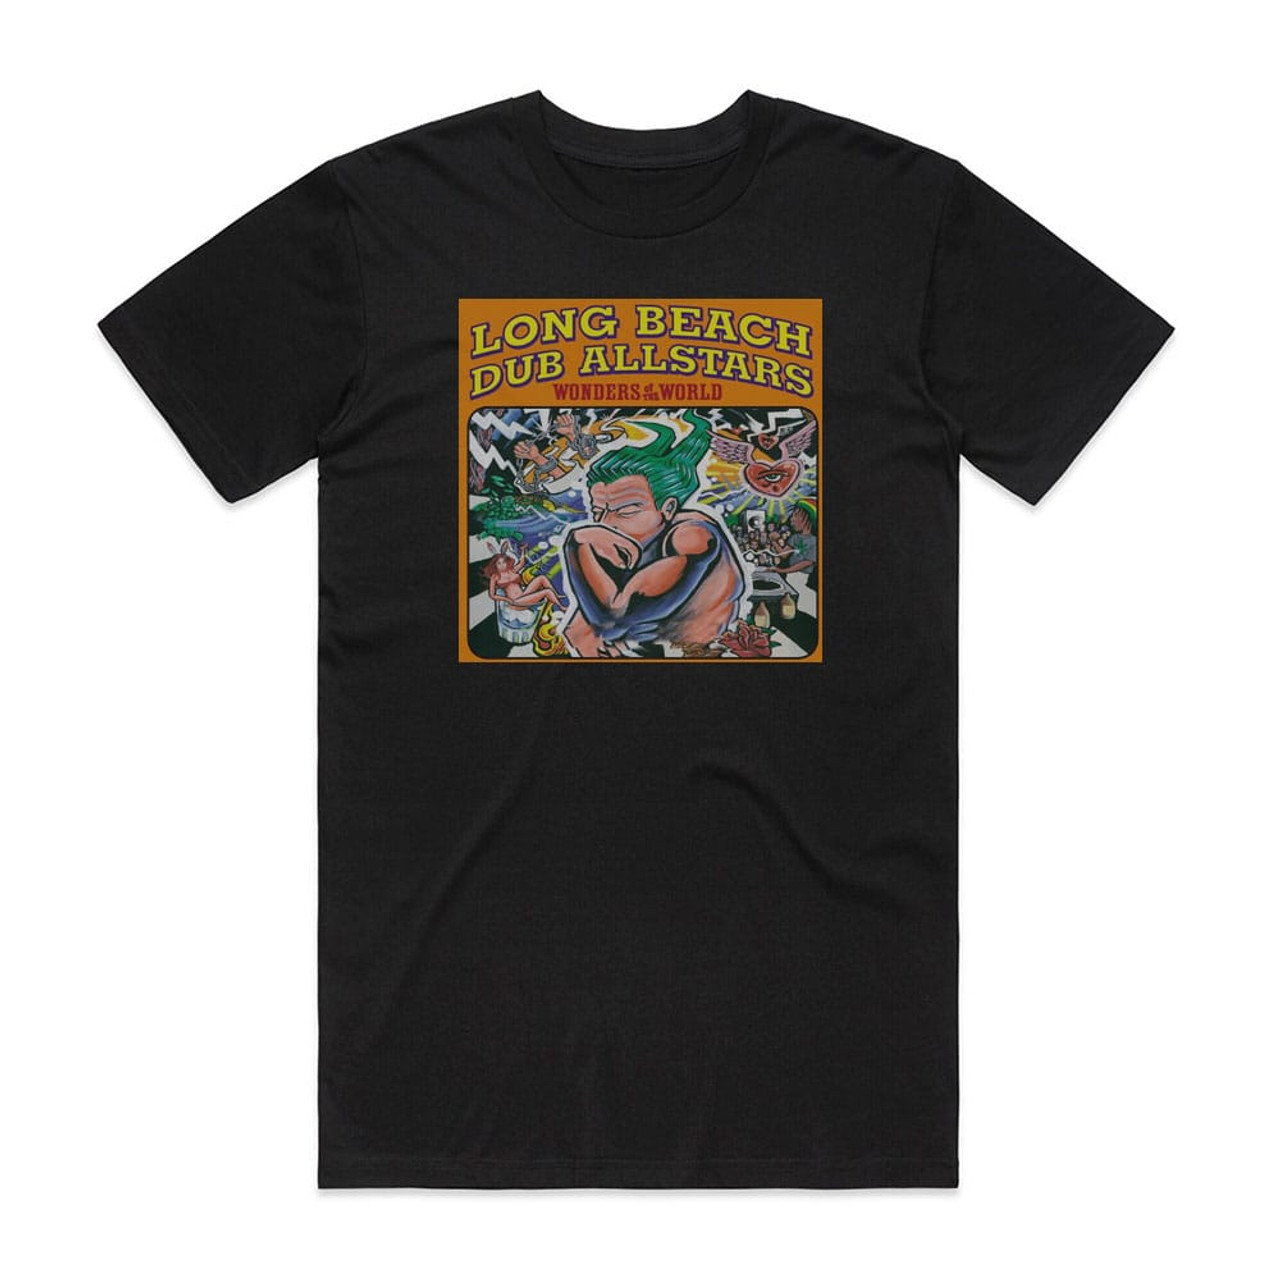 Long Beach Dub Allstars Wonders Of The World Album Cover T-Shirt Black